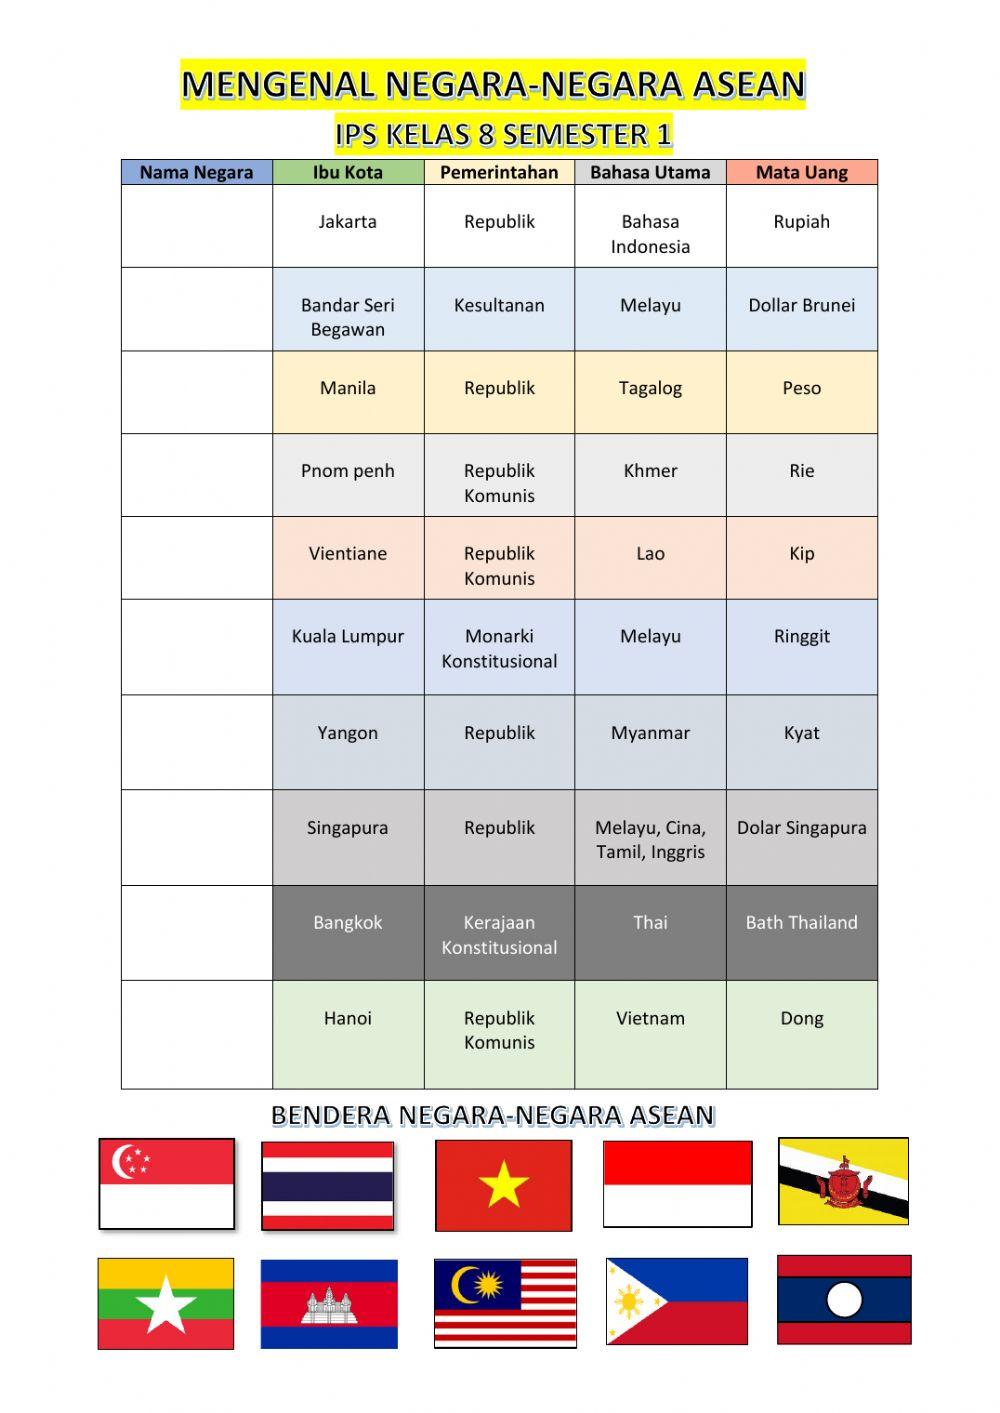 Mengenal Negara-negara ASEAN